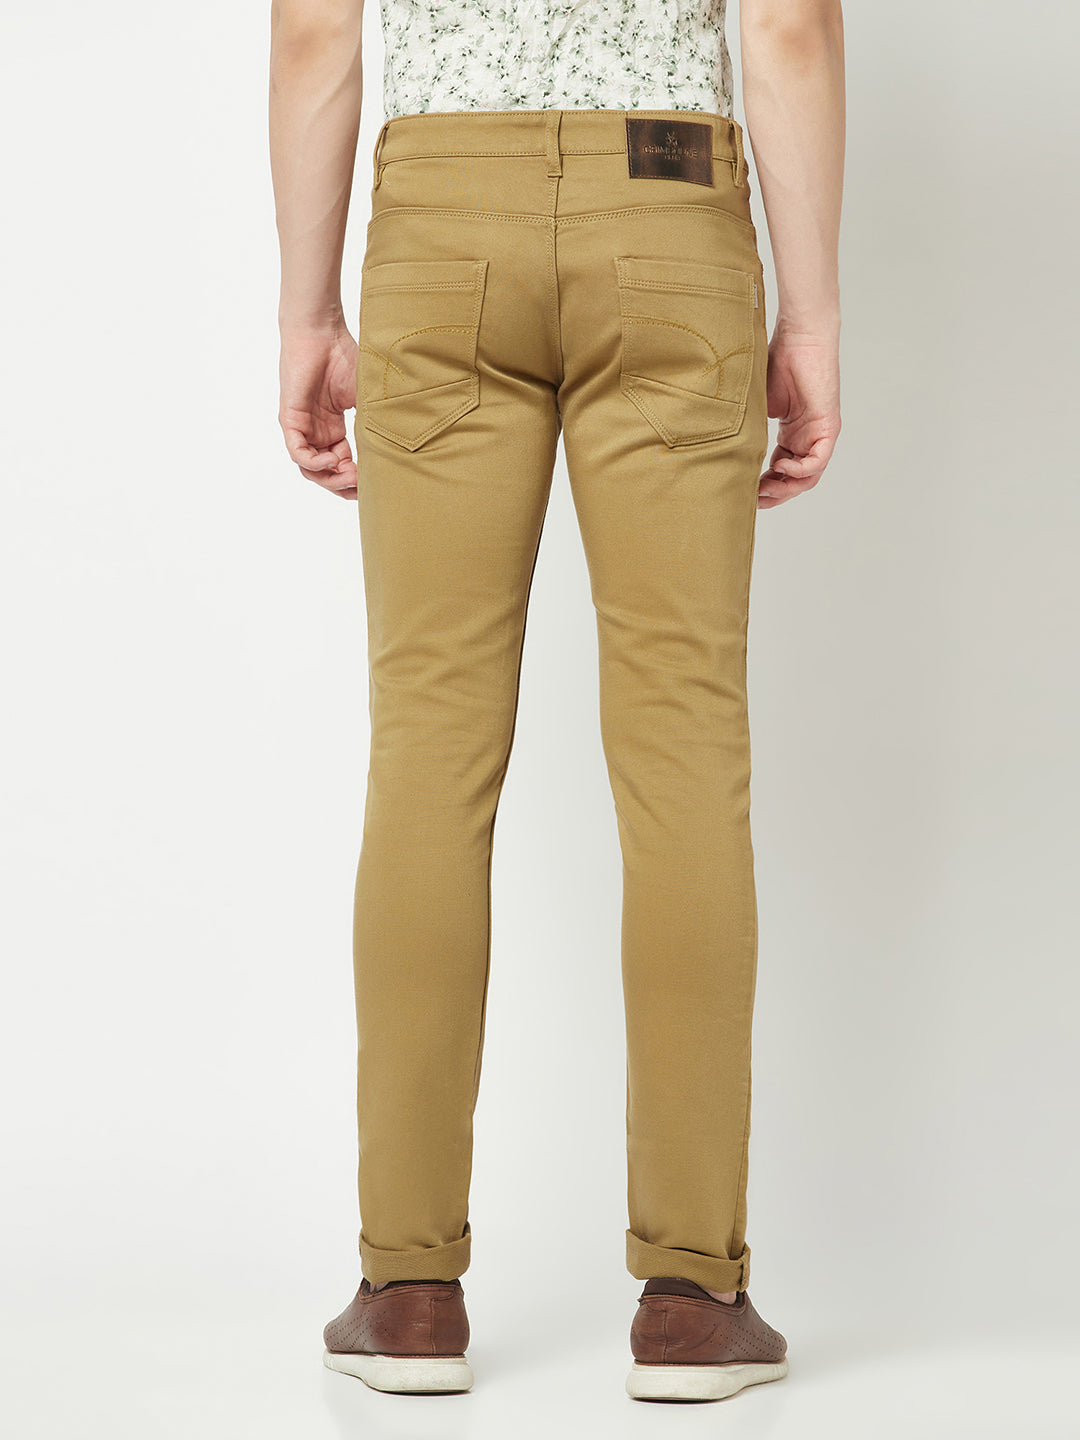  Khaki Chino Trousers